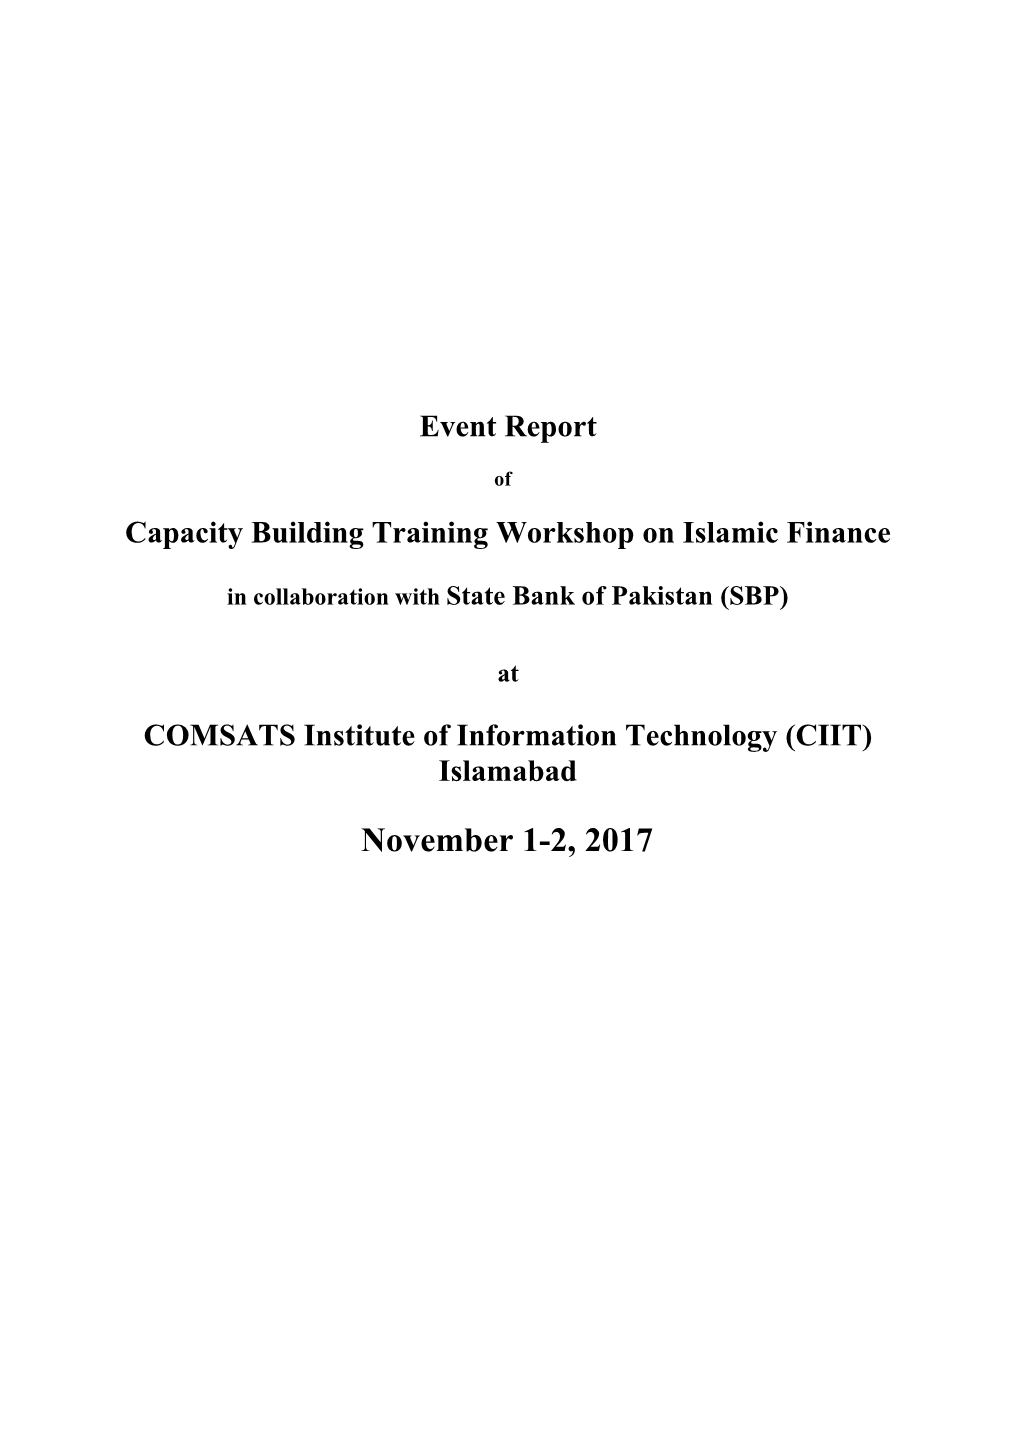 Capacity Building Training Workshop on Islamic Finance